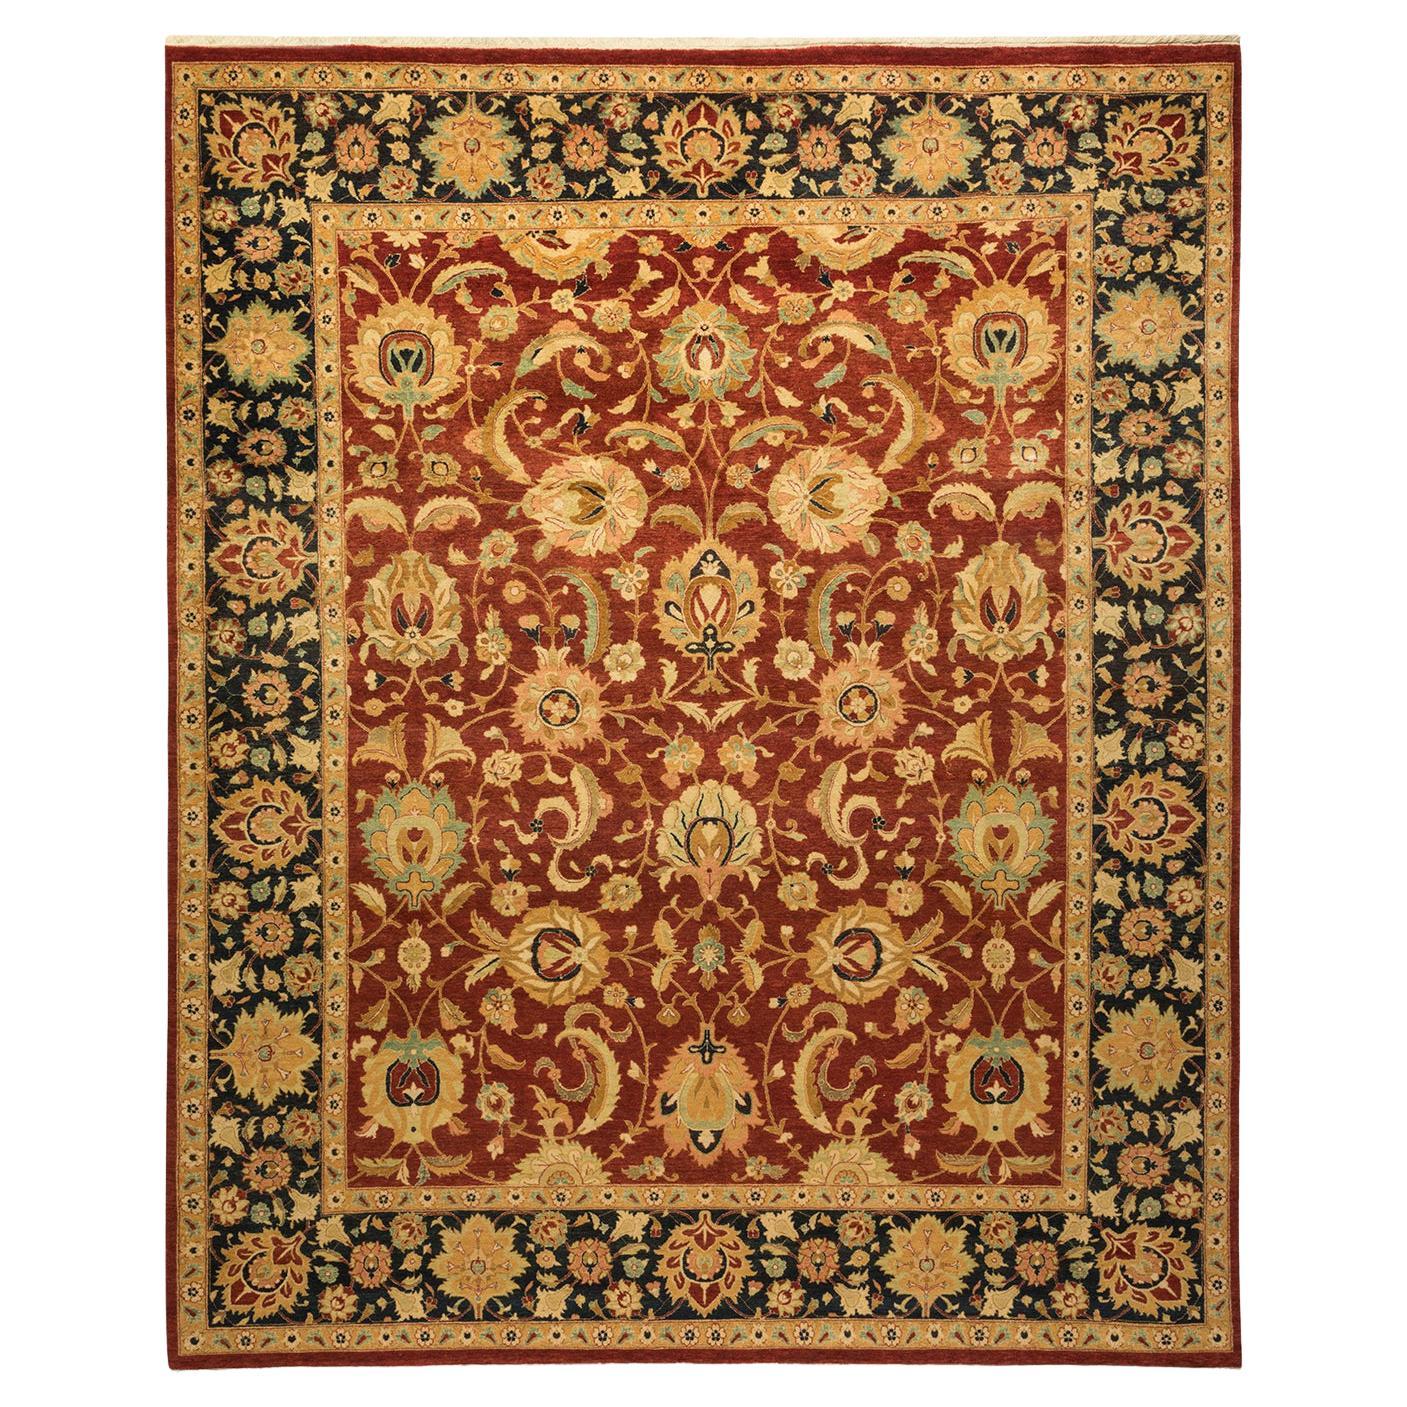 Handgefertigter, traditioneller Mogul-Roter Teppich, Unikat im Angebot